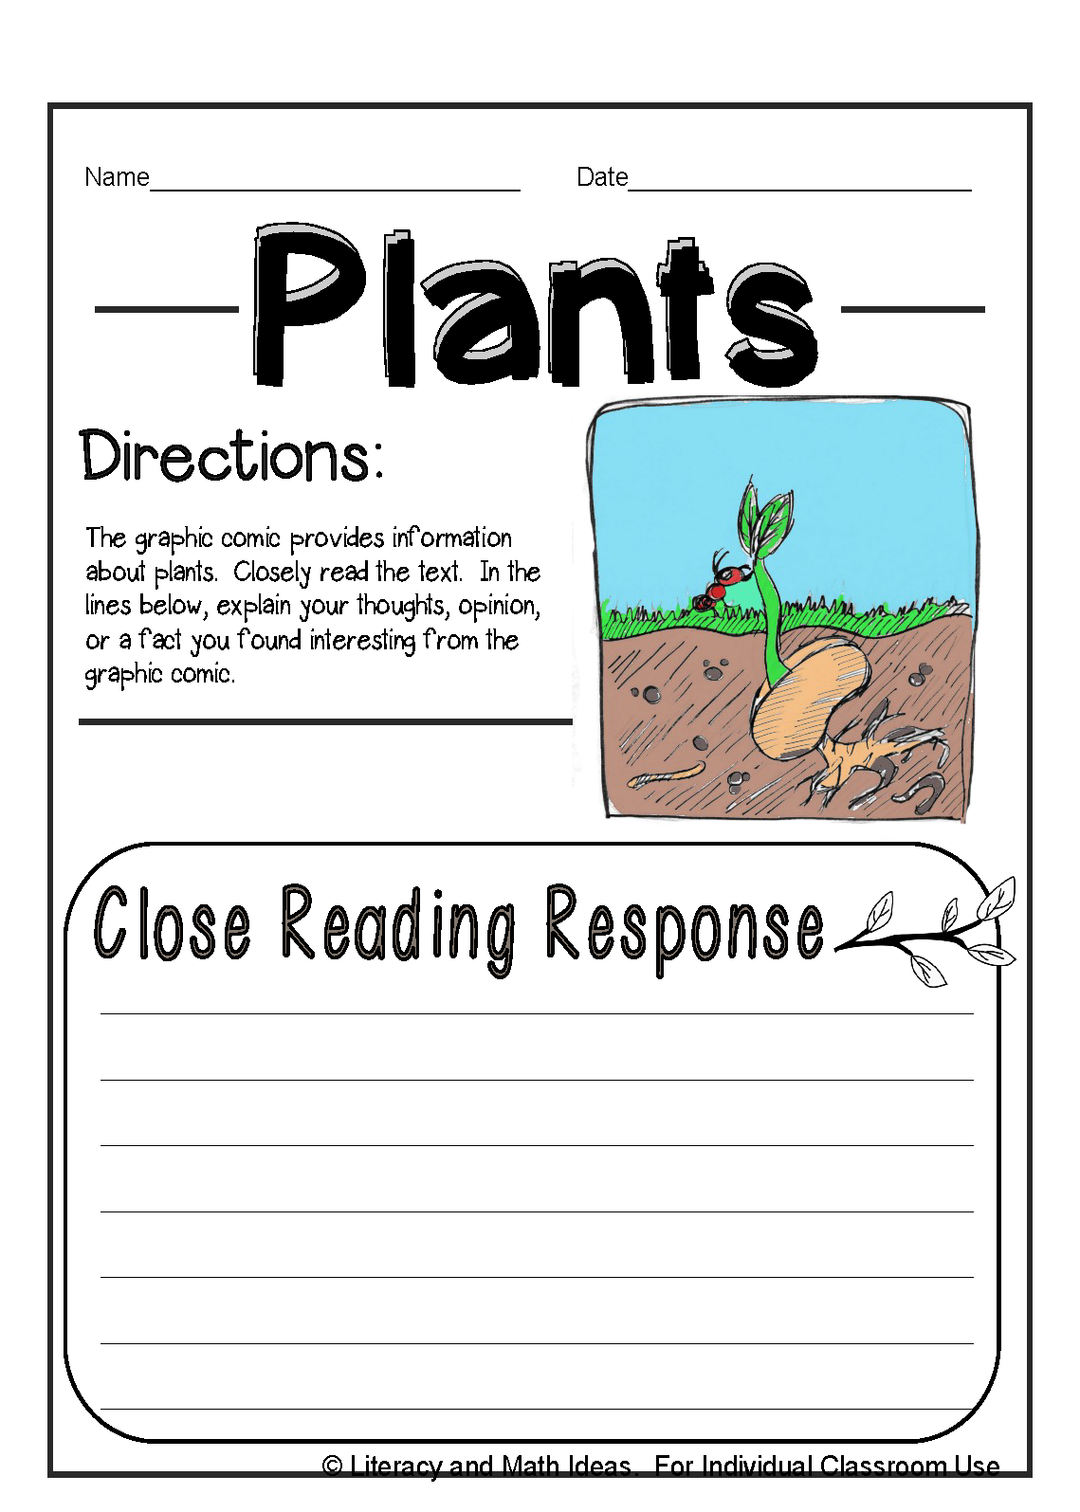 Plants Interactive Notebook